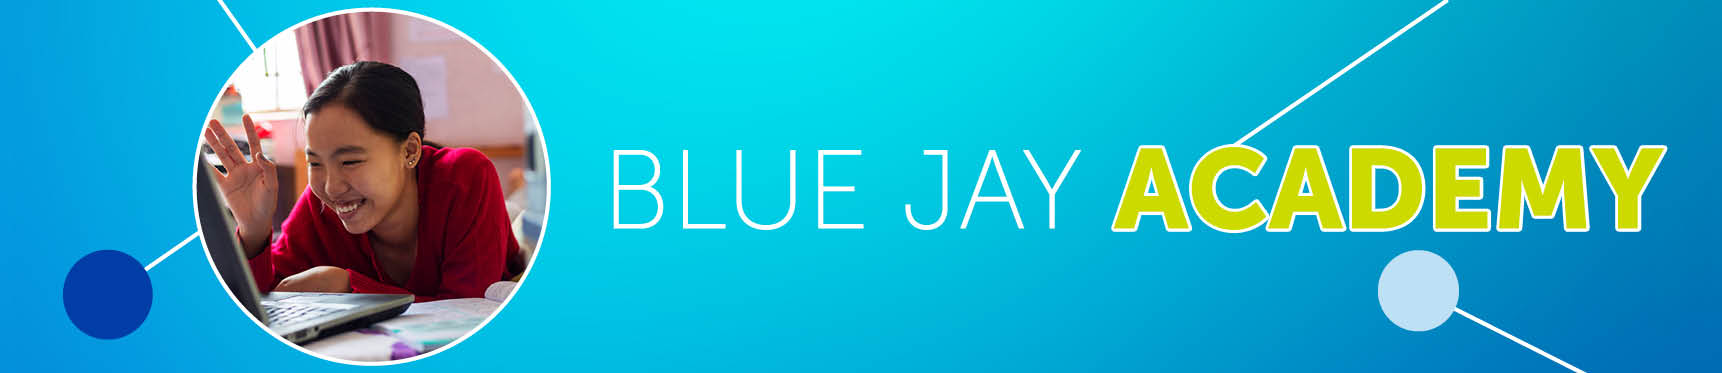 Blue Jay Academy Web Header